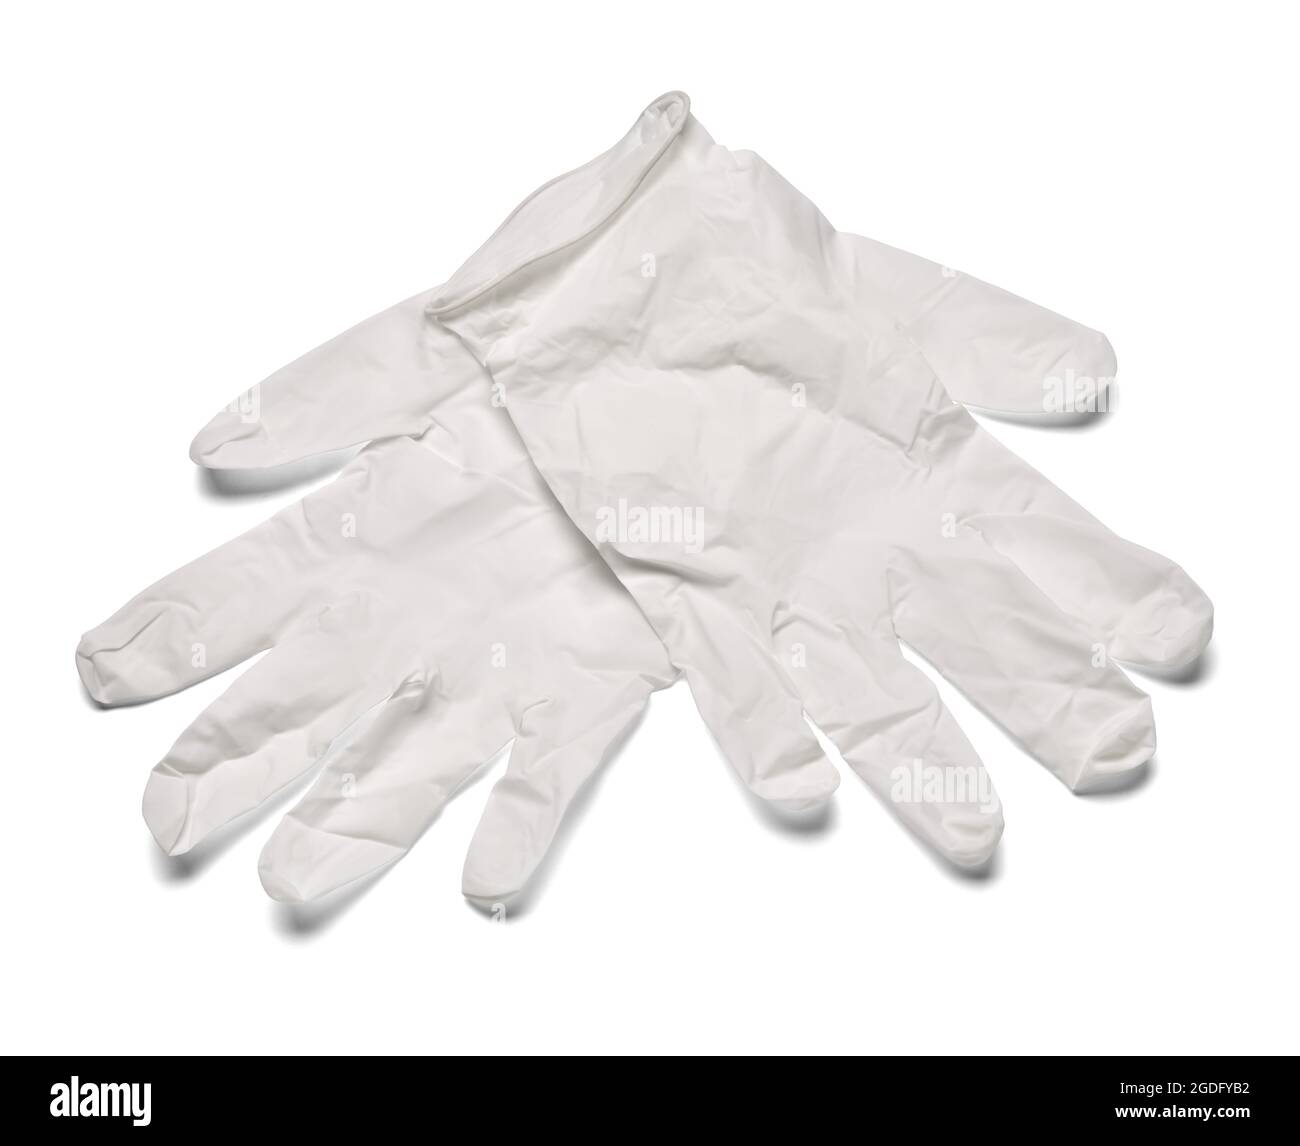 Latex Handschuh Schutz Virus Corona Coronavirus Krankheit Epidemie medizinische Gesundheit Hygiene Stockfoto